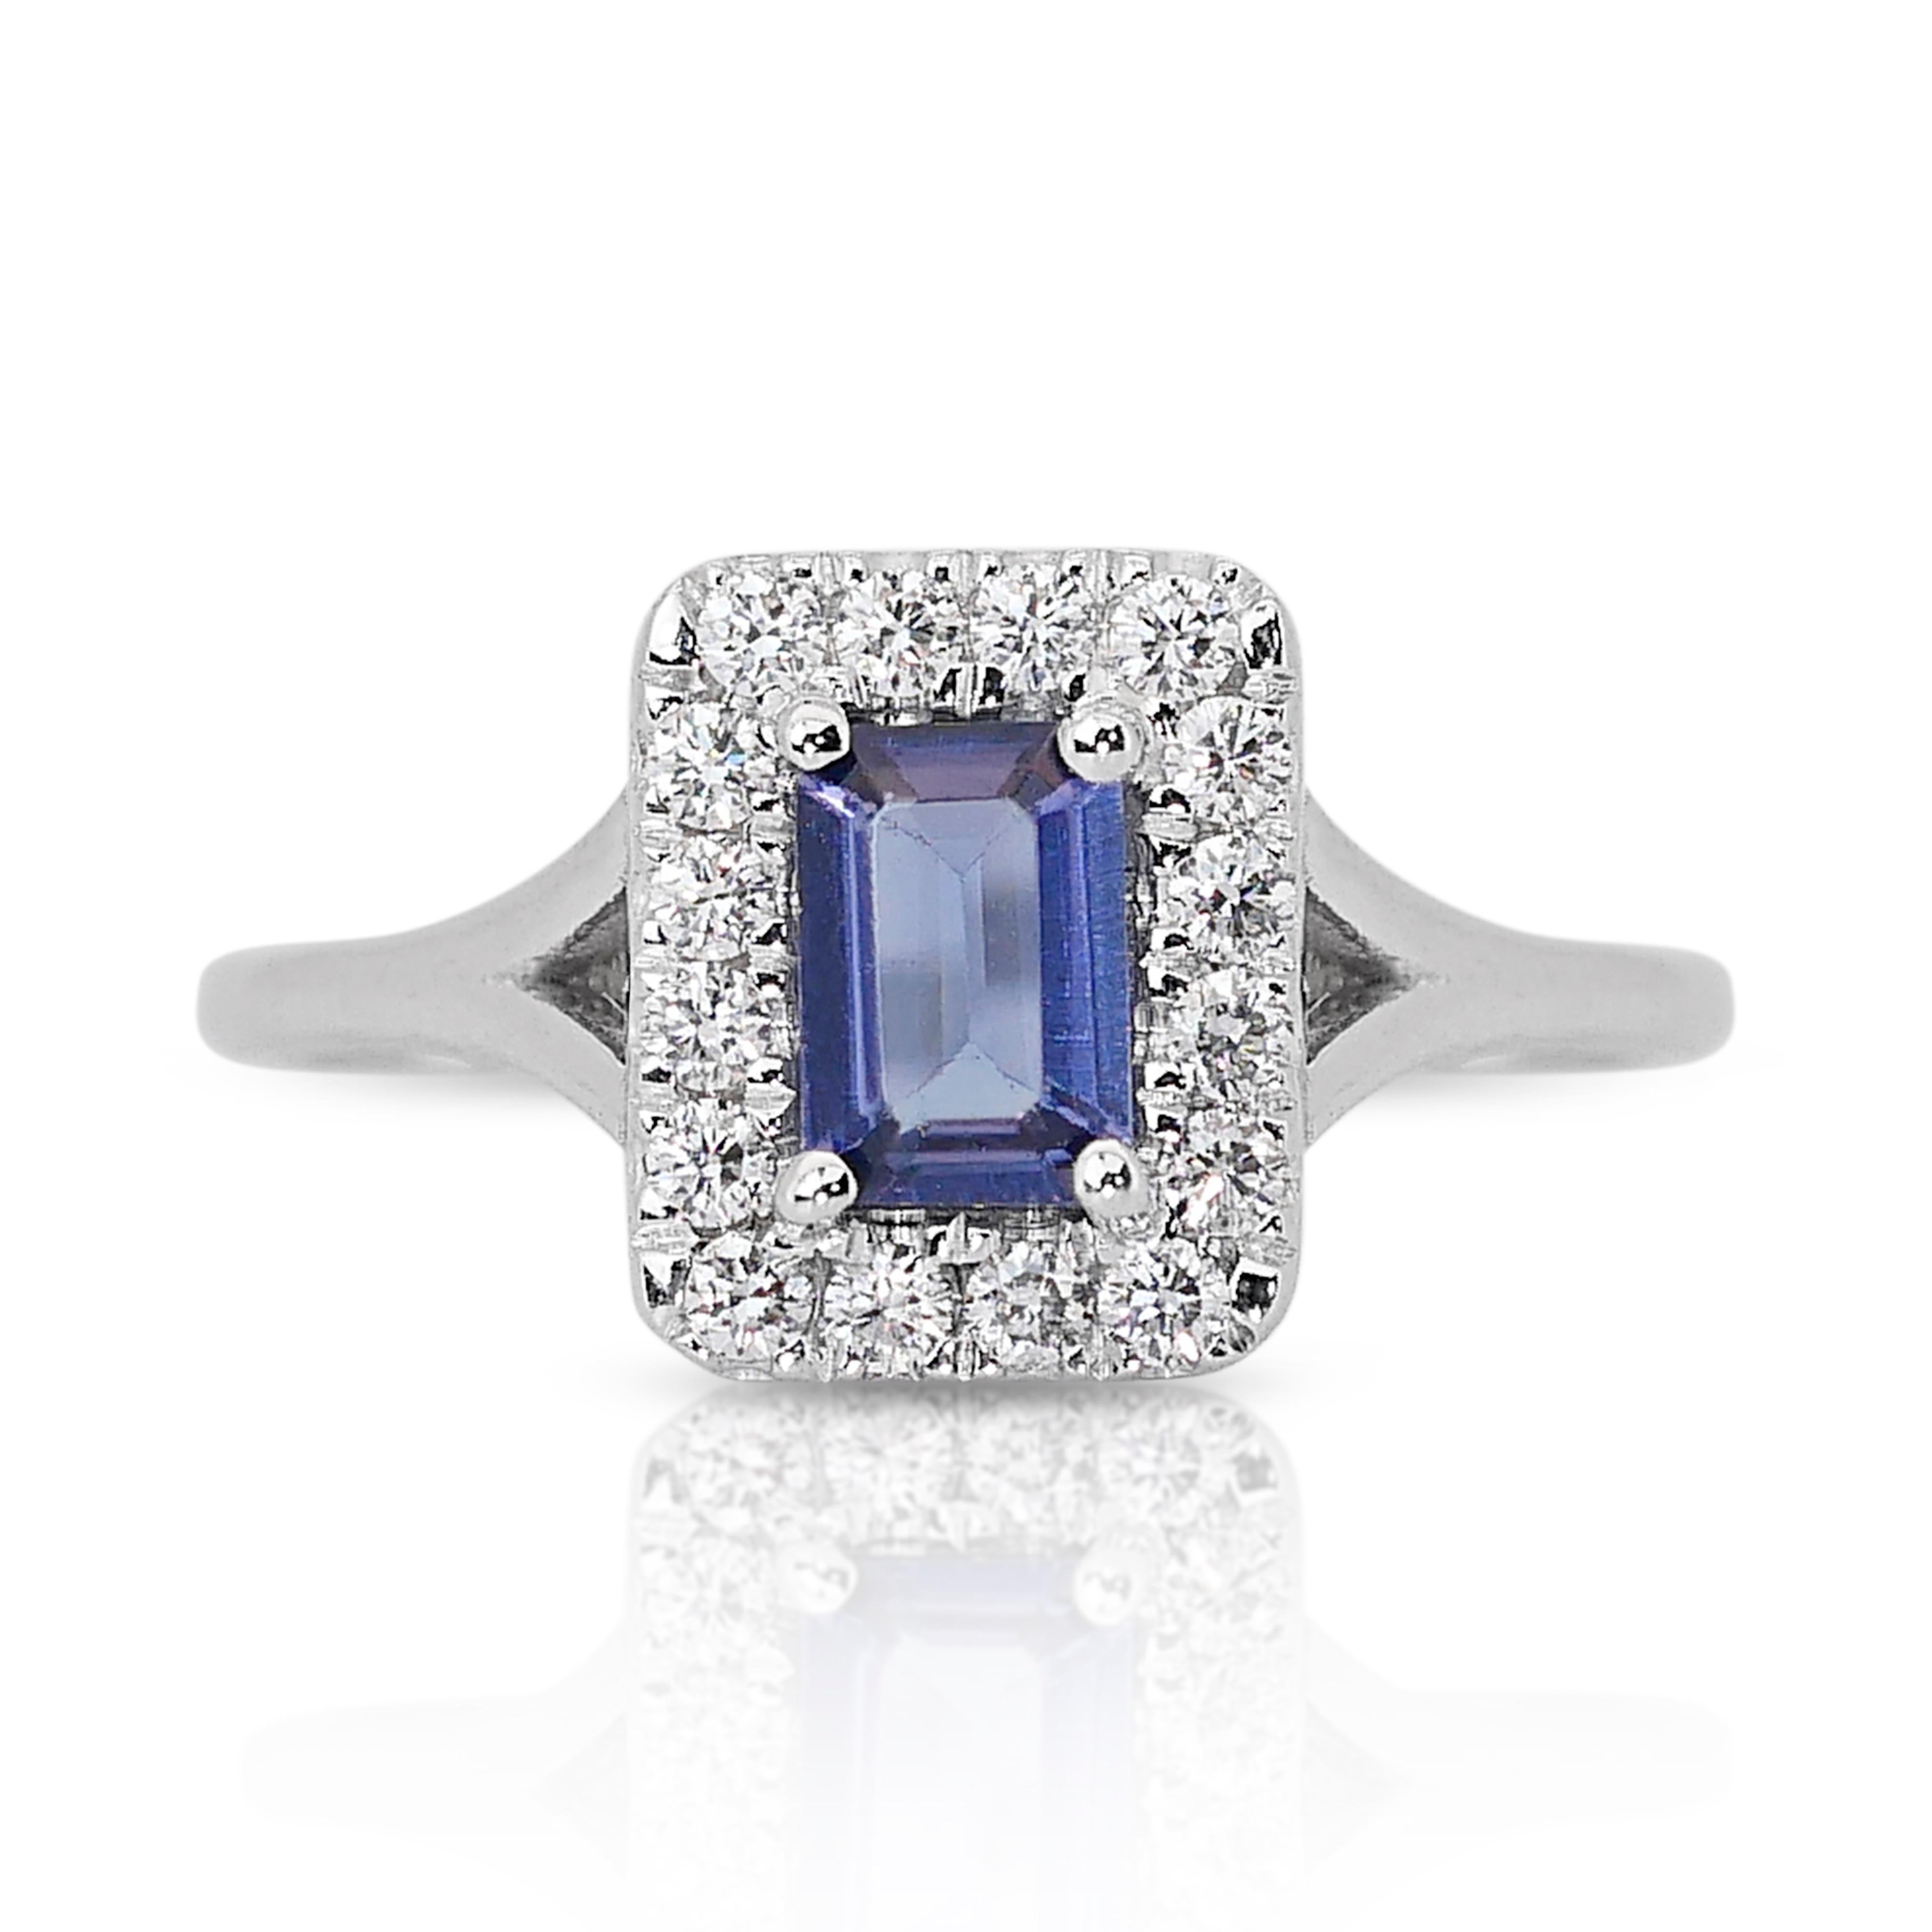 Enchanting 0.93ct Tanzanite and Diamonds Halo Ring in 18k White Gold - IGI  For Sale 3